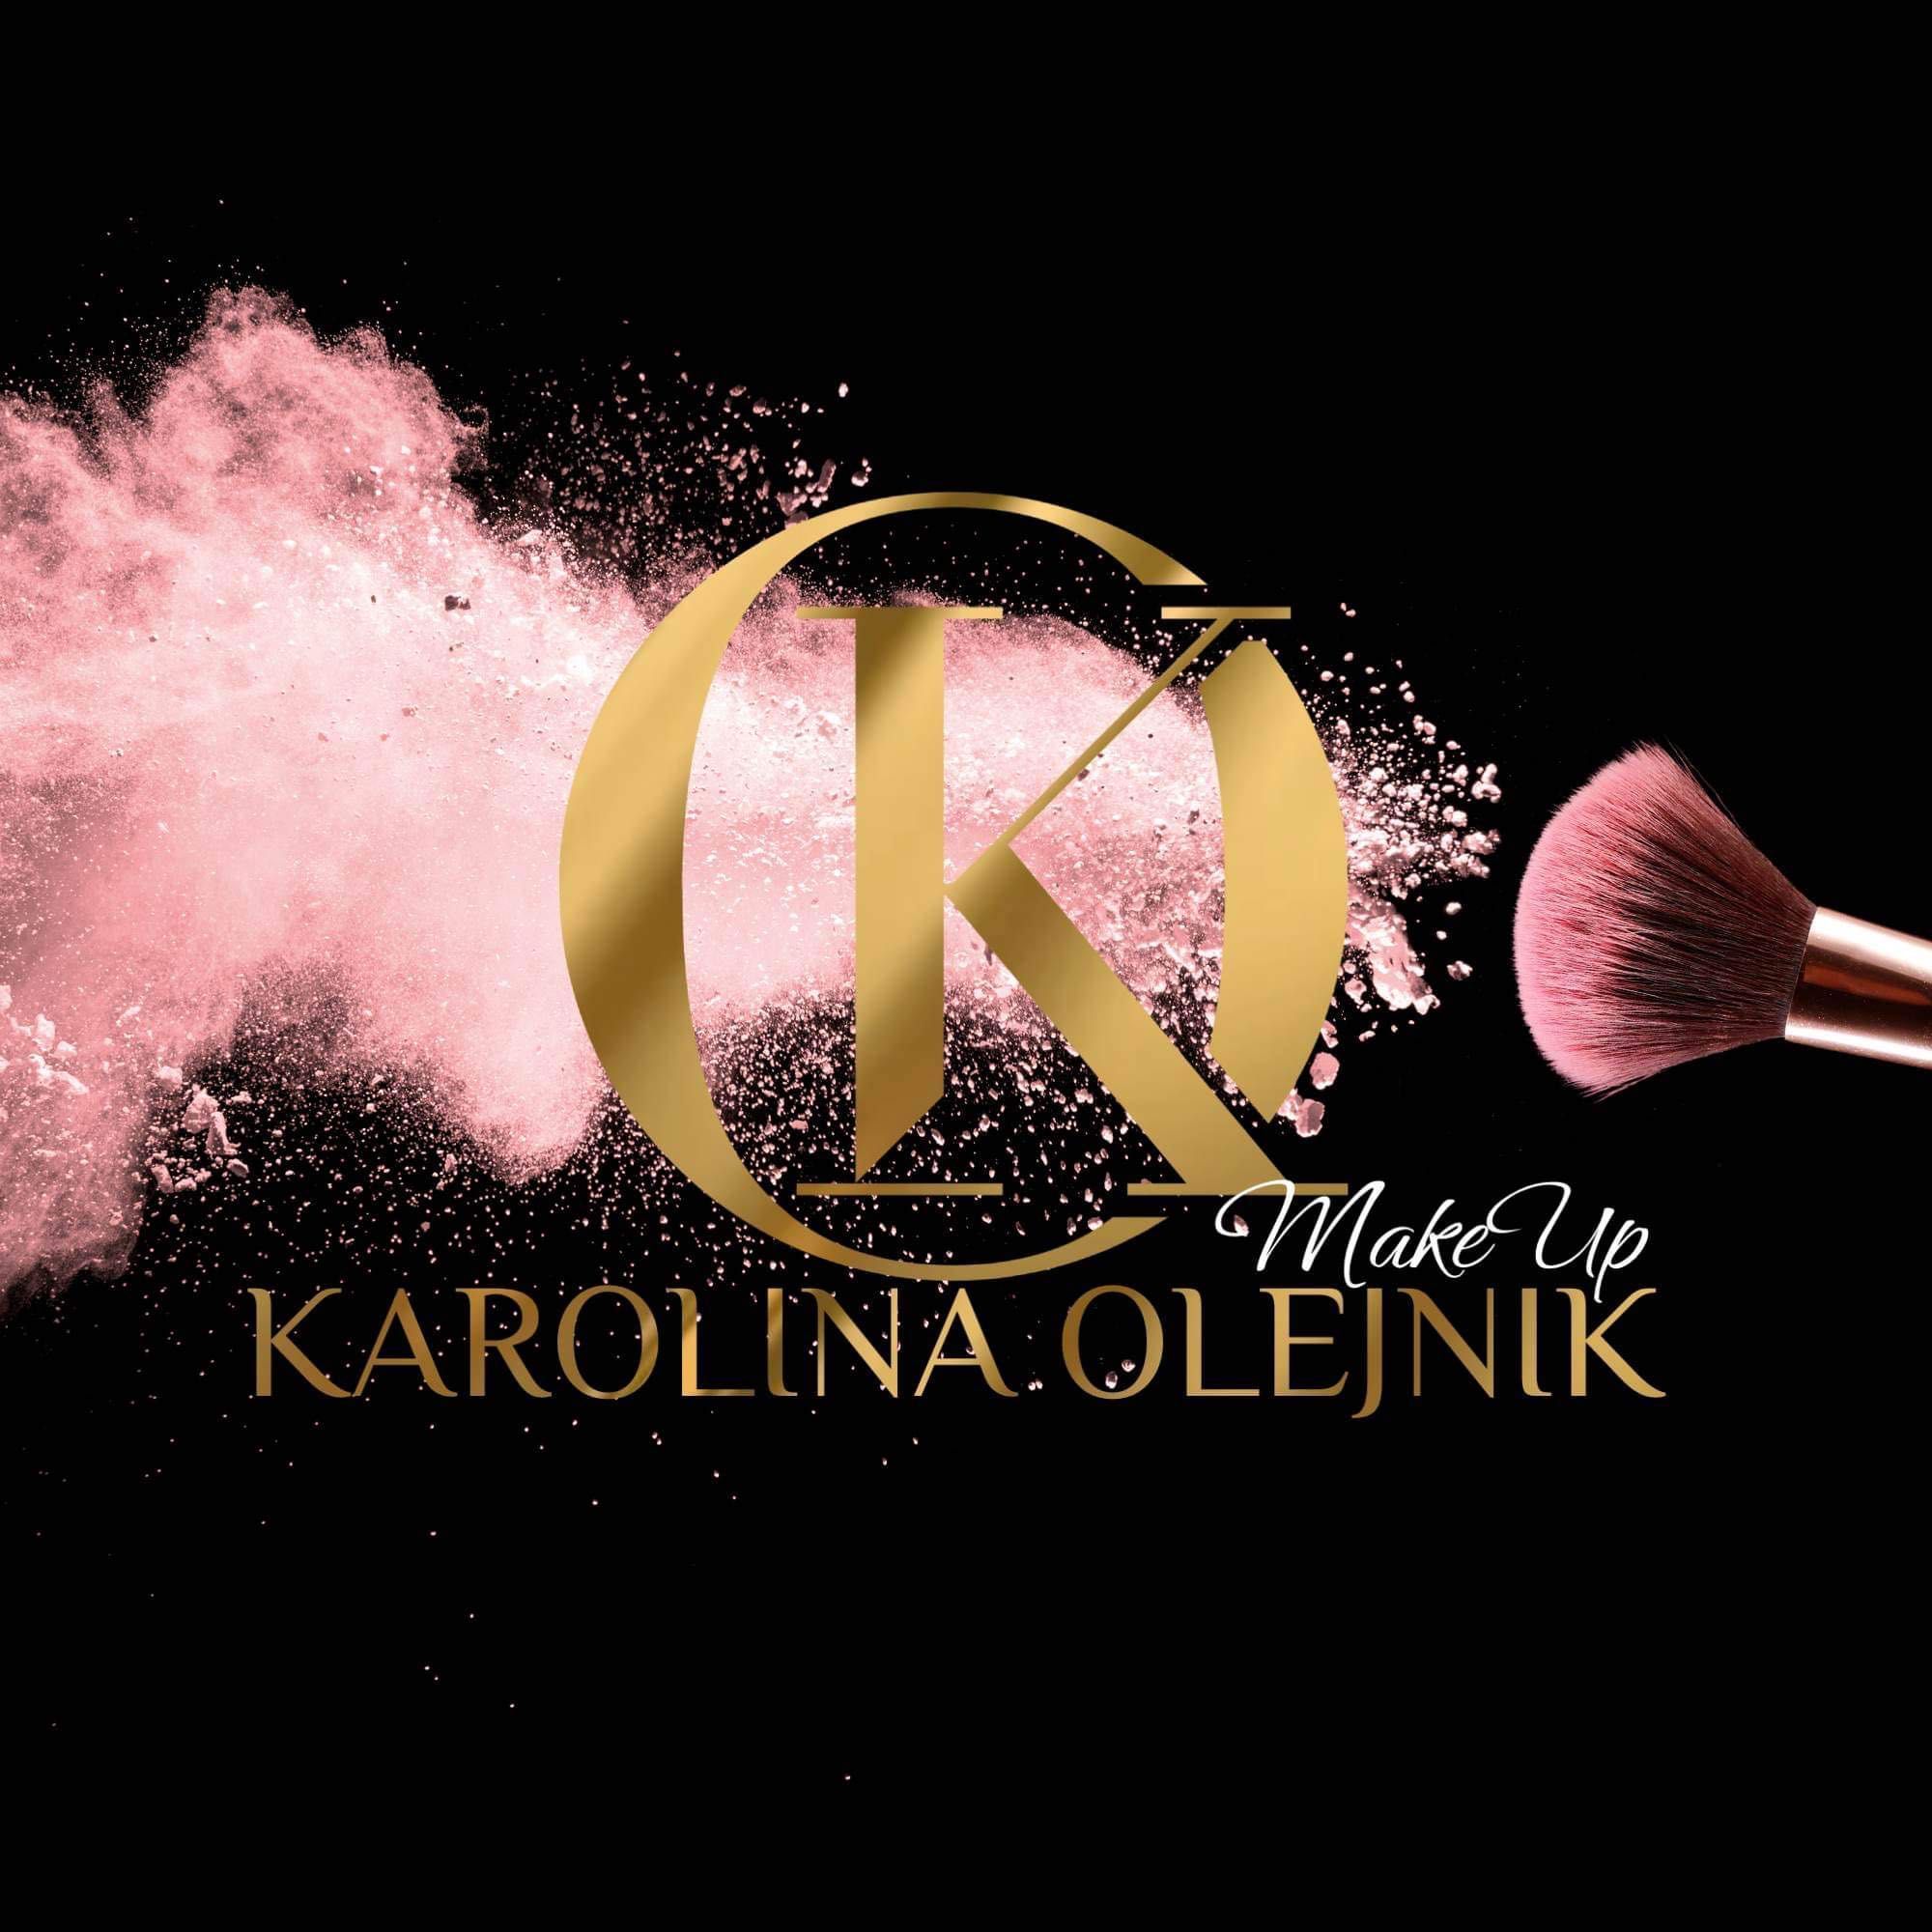 Karolina Olejnik Make Up, Rokszyce, 34, 97-371, Wola Krzysztoporska